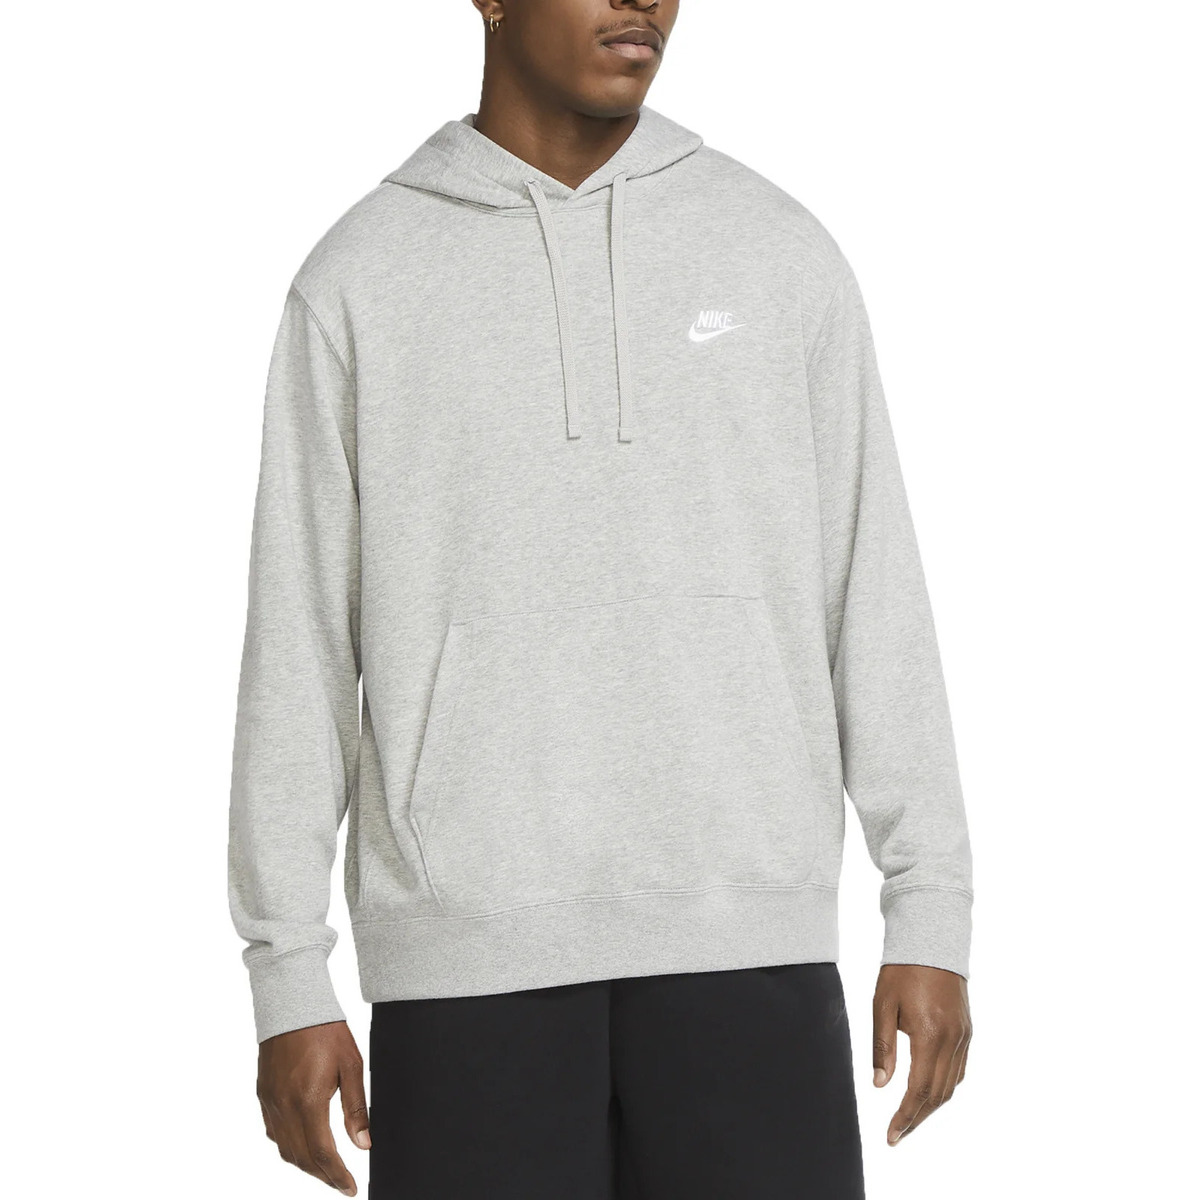 Vêtements similar Sweats Nike Club Gris